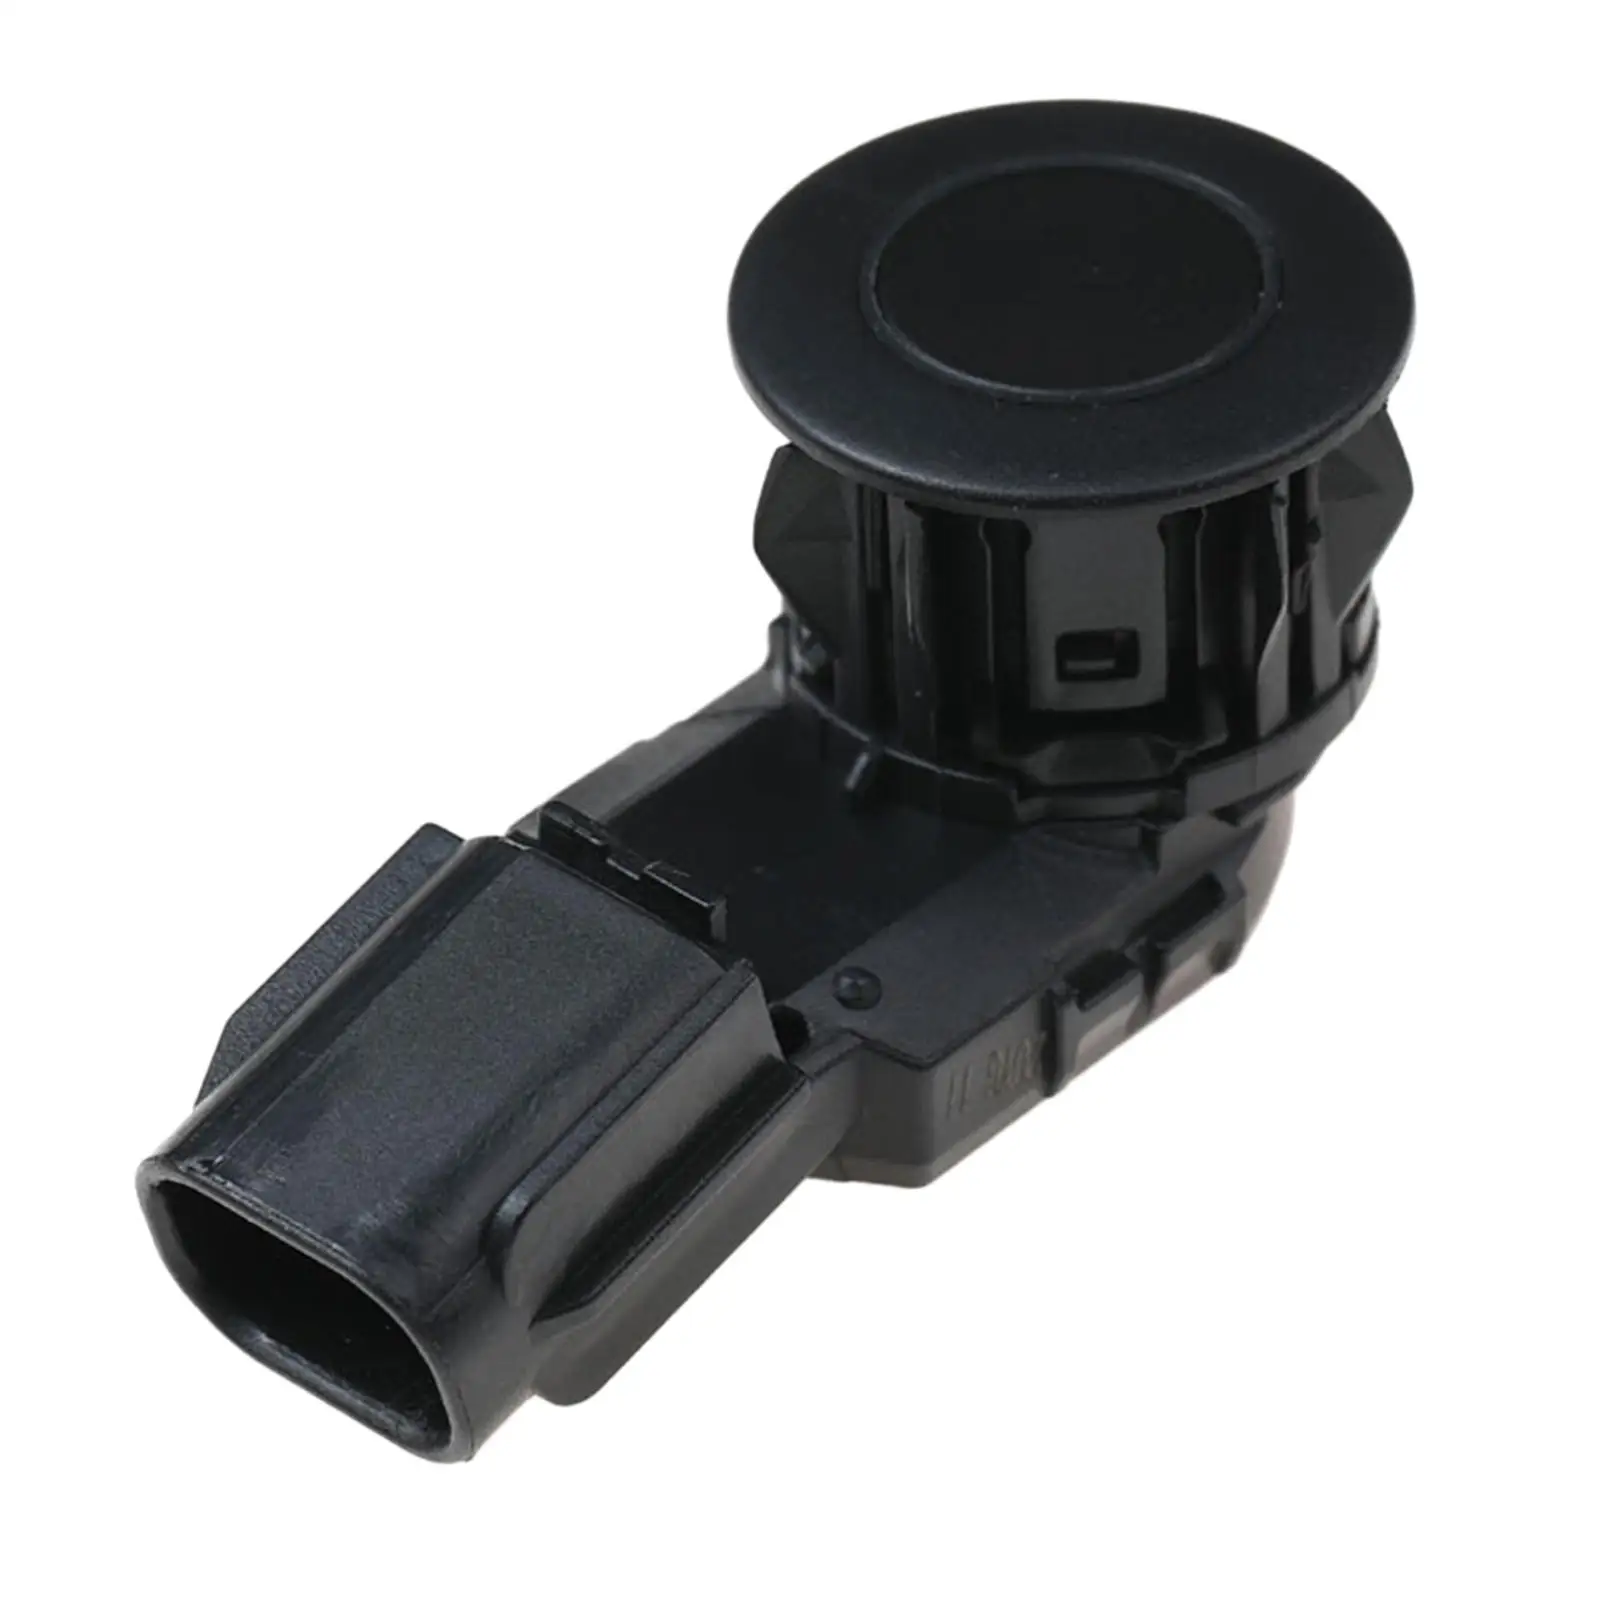 PDC Parking Assist Sensor Reversing Distance Control Sensor Black for Toyota RAV4 2013-2016 89341-42030 Replace Accessories